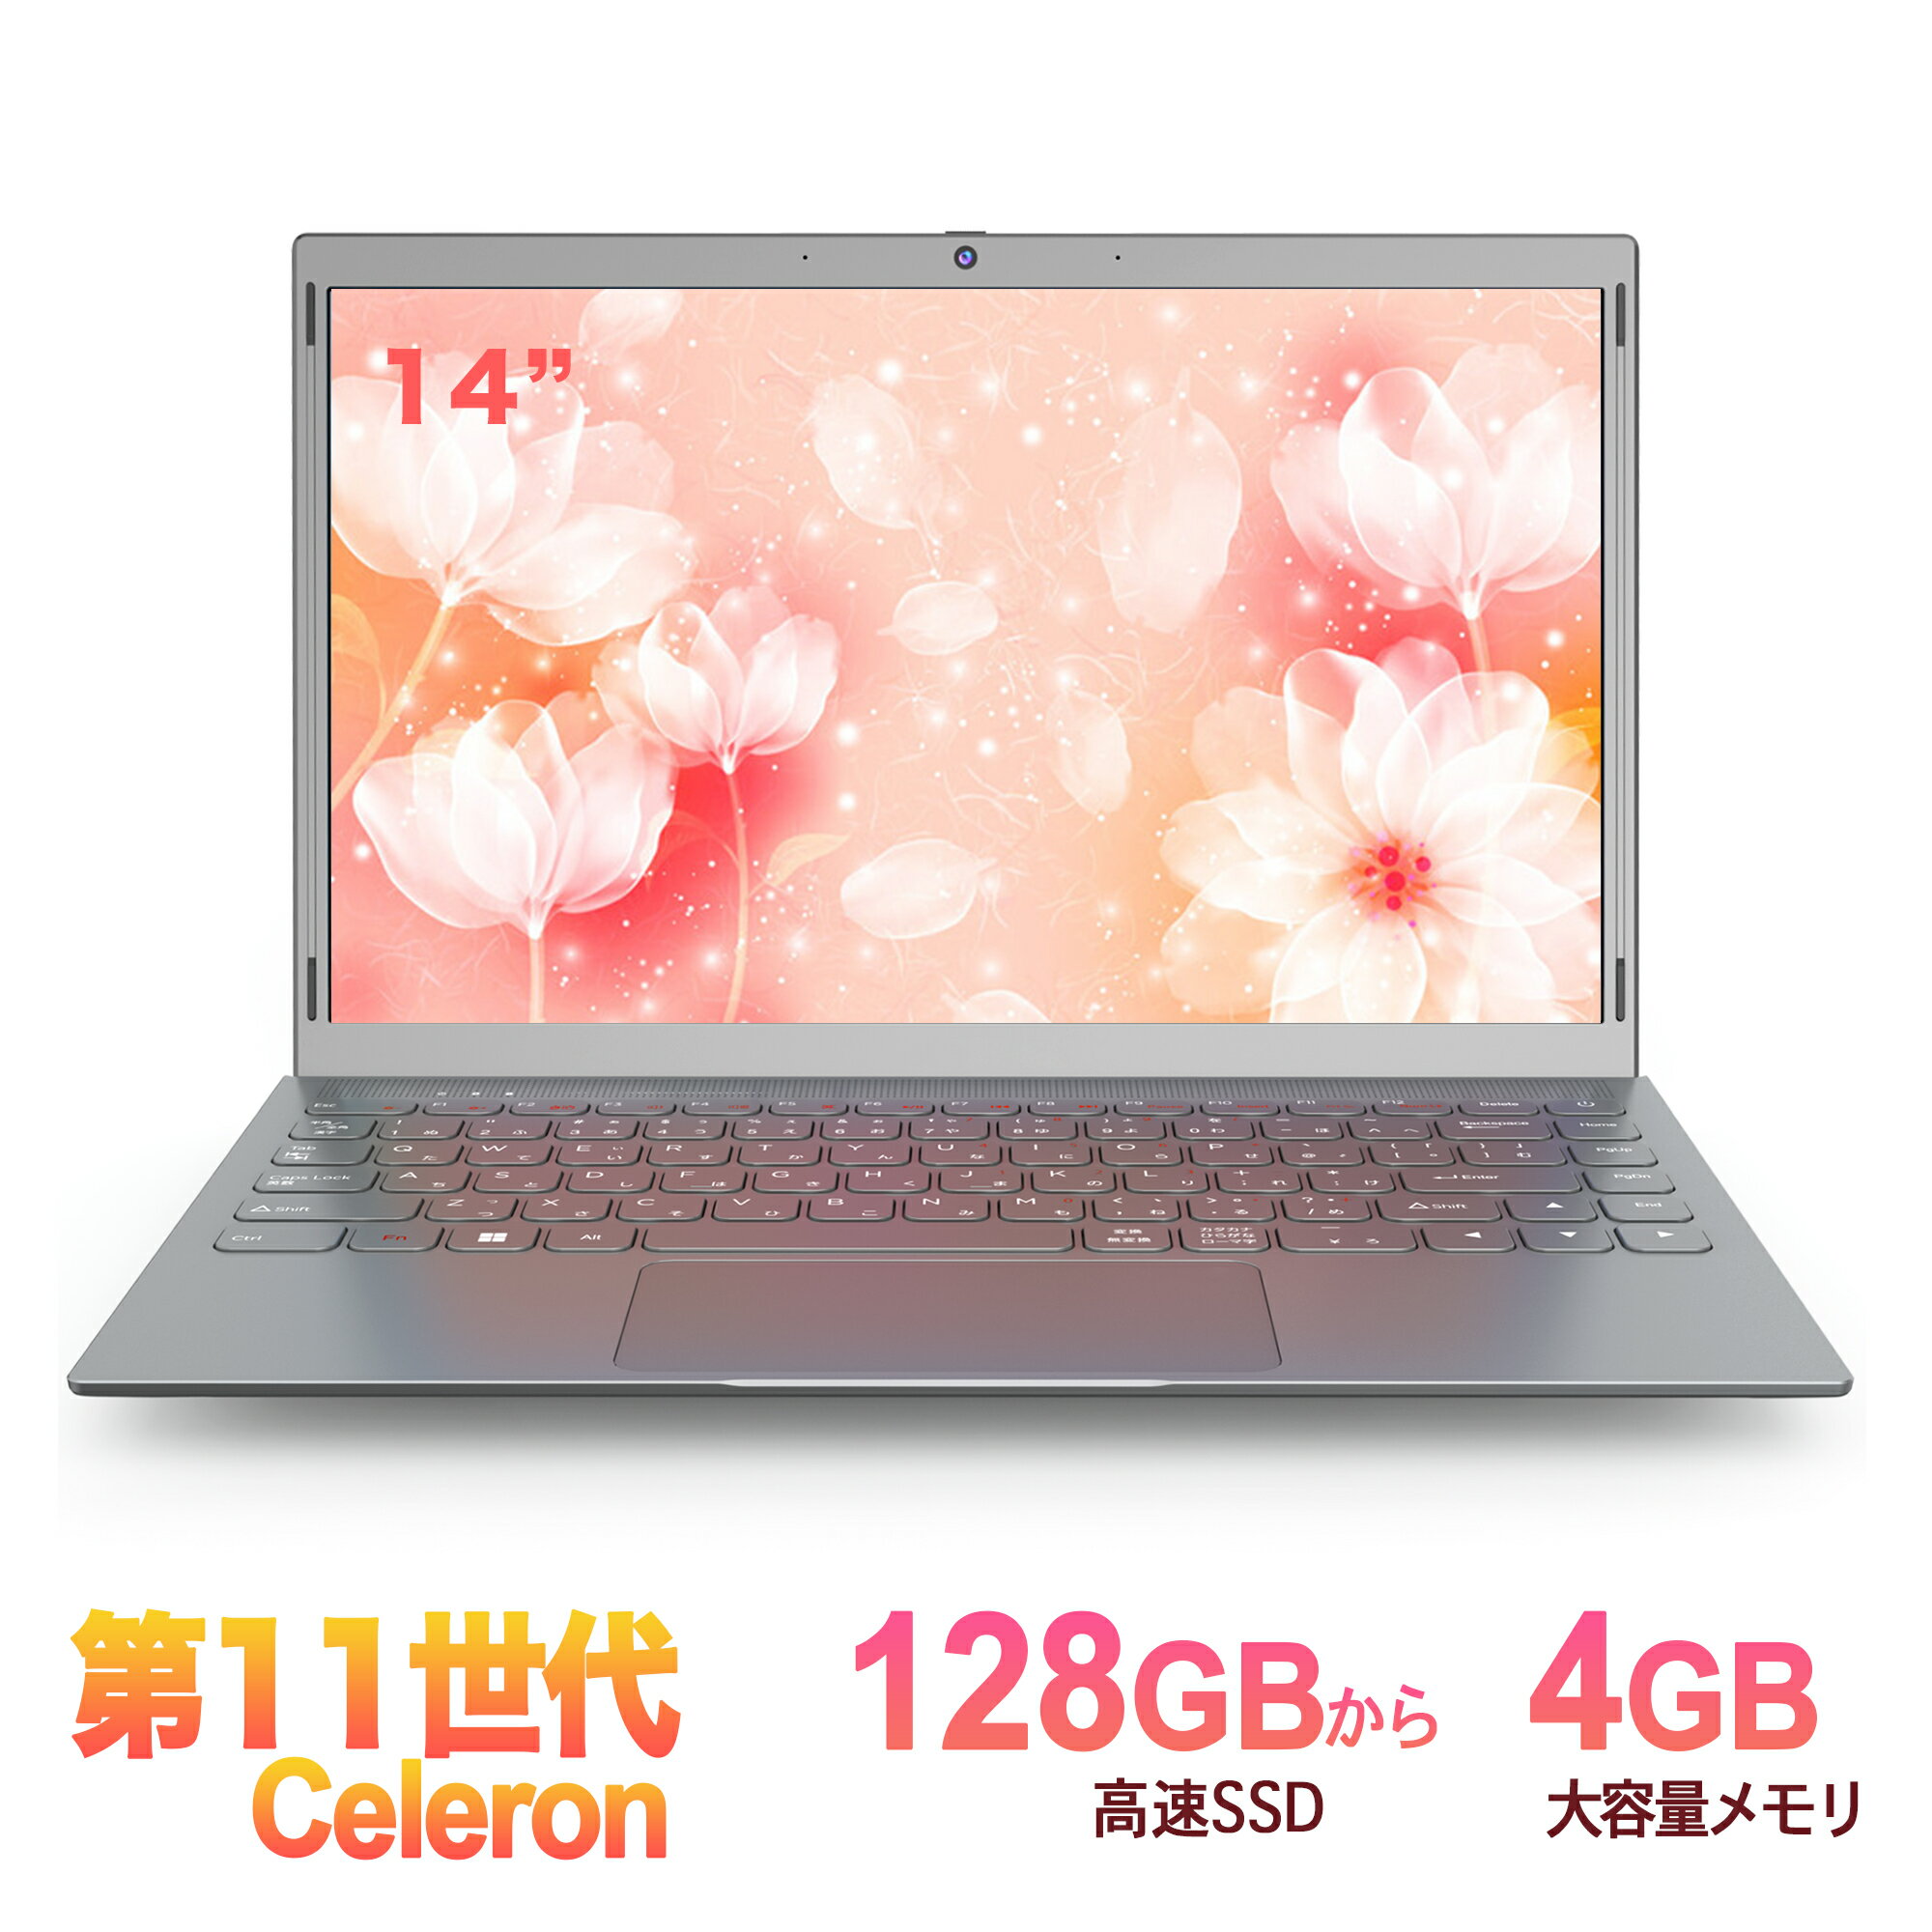 Win11搭載 ノートパソコン新品 Office付き 初心者向け 日本語キーボード Celeron N4020Cメモリー:4GB/高速SSD:128GB/IPS広視野角14型液晶/Webカメラ/USB 3.0/HDMI/無線機能/Bluetooth/超軽量大容量バッテリー